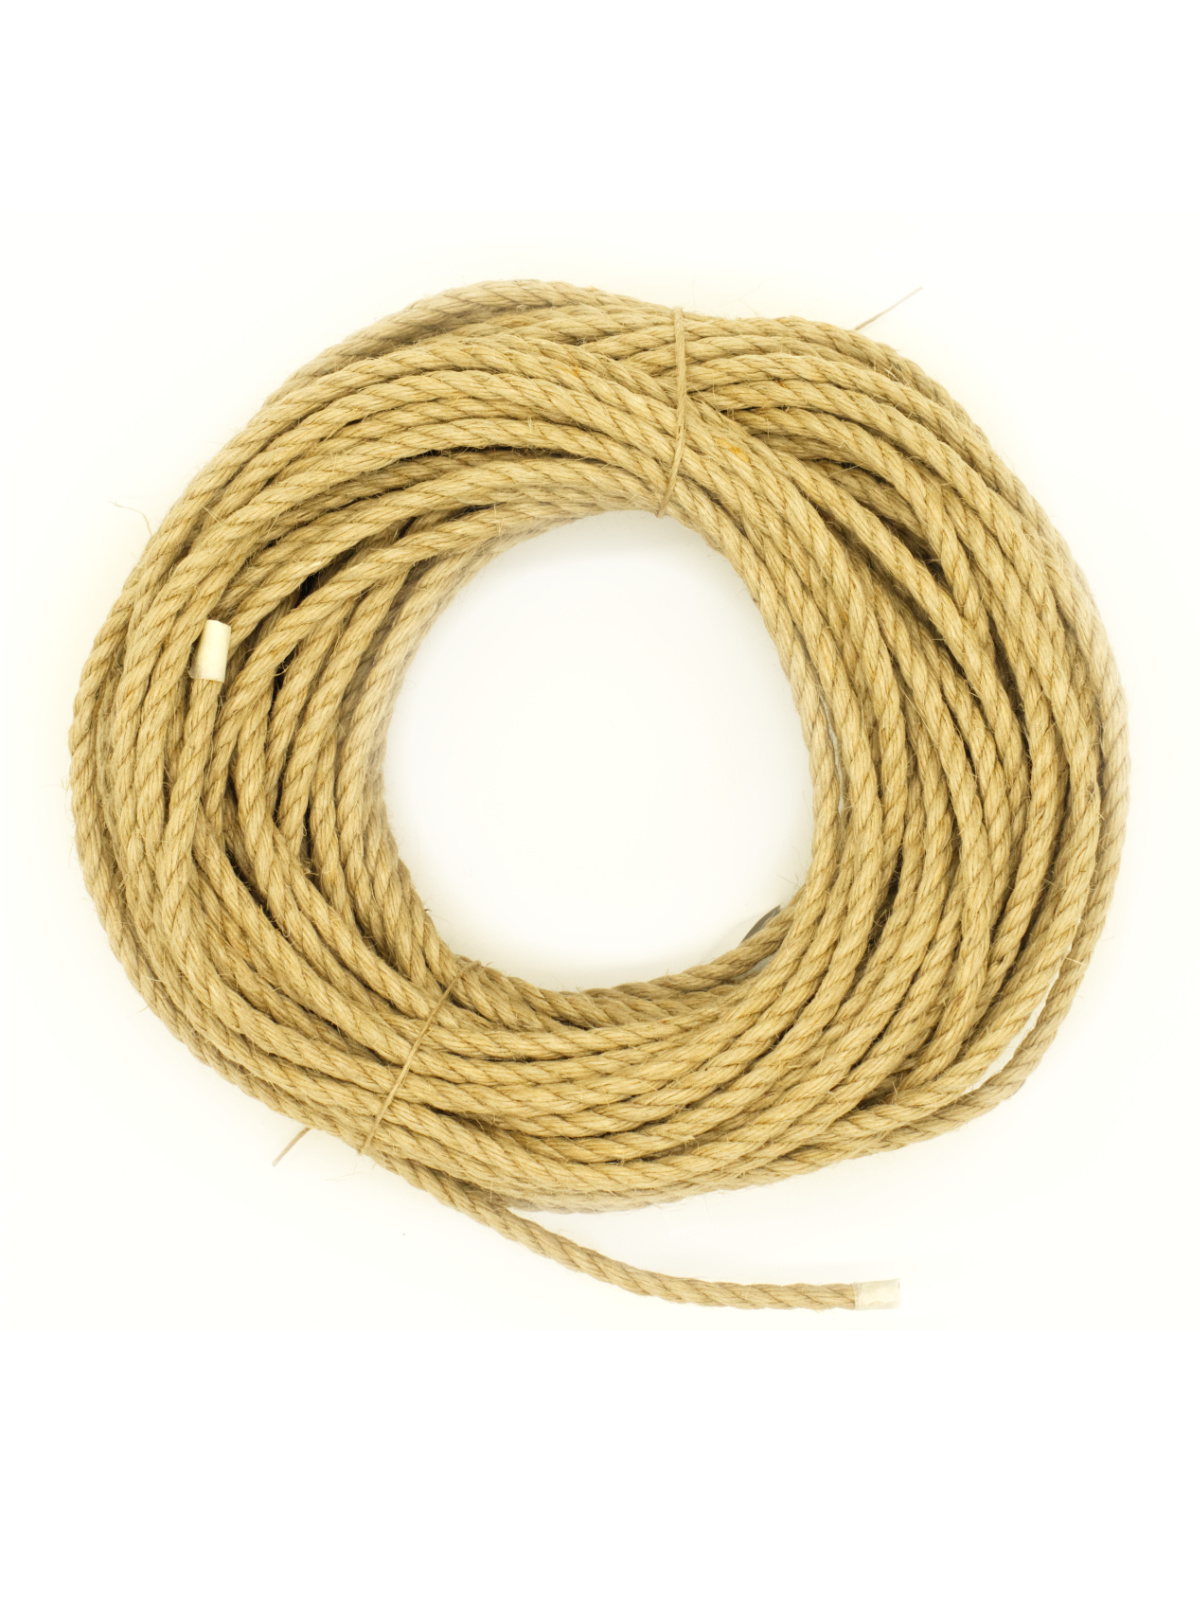 100m ∅ 5mm raw jute rope, AMATSUNAWA 27, JBO-free, for DIY processing